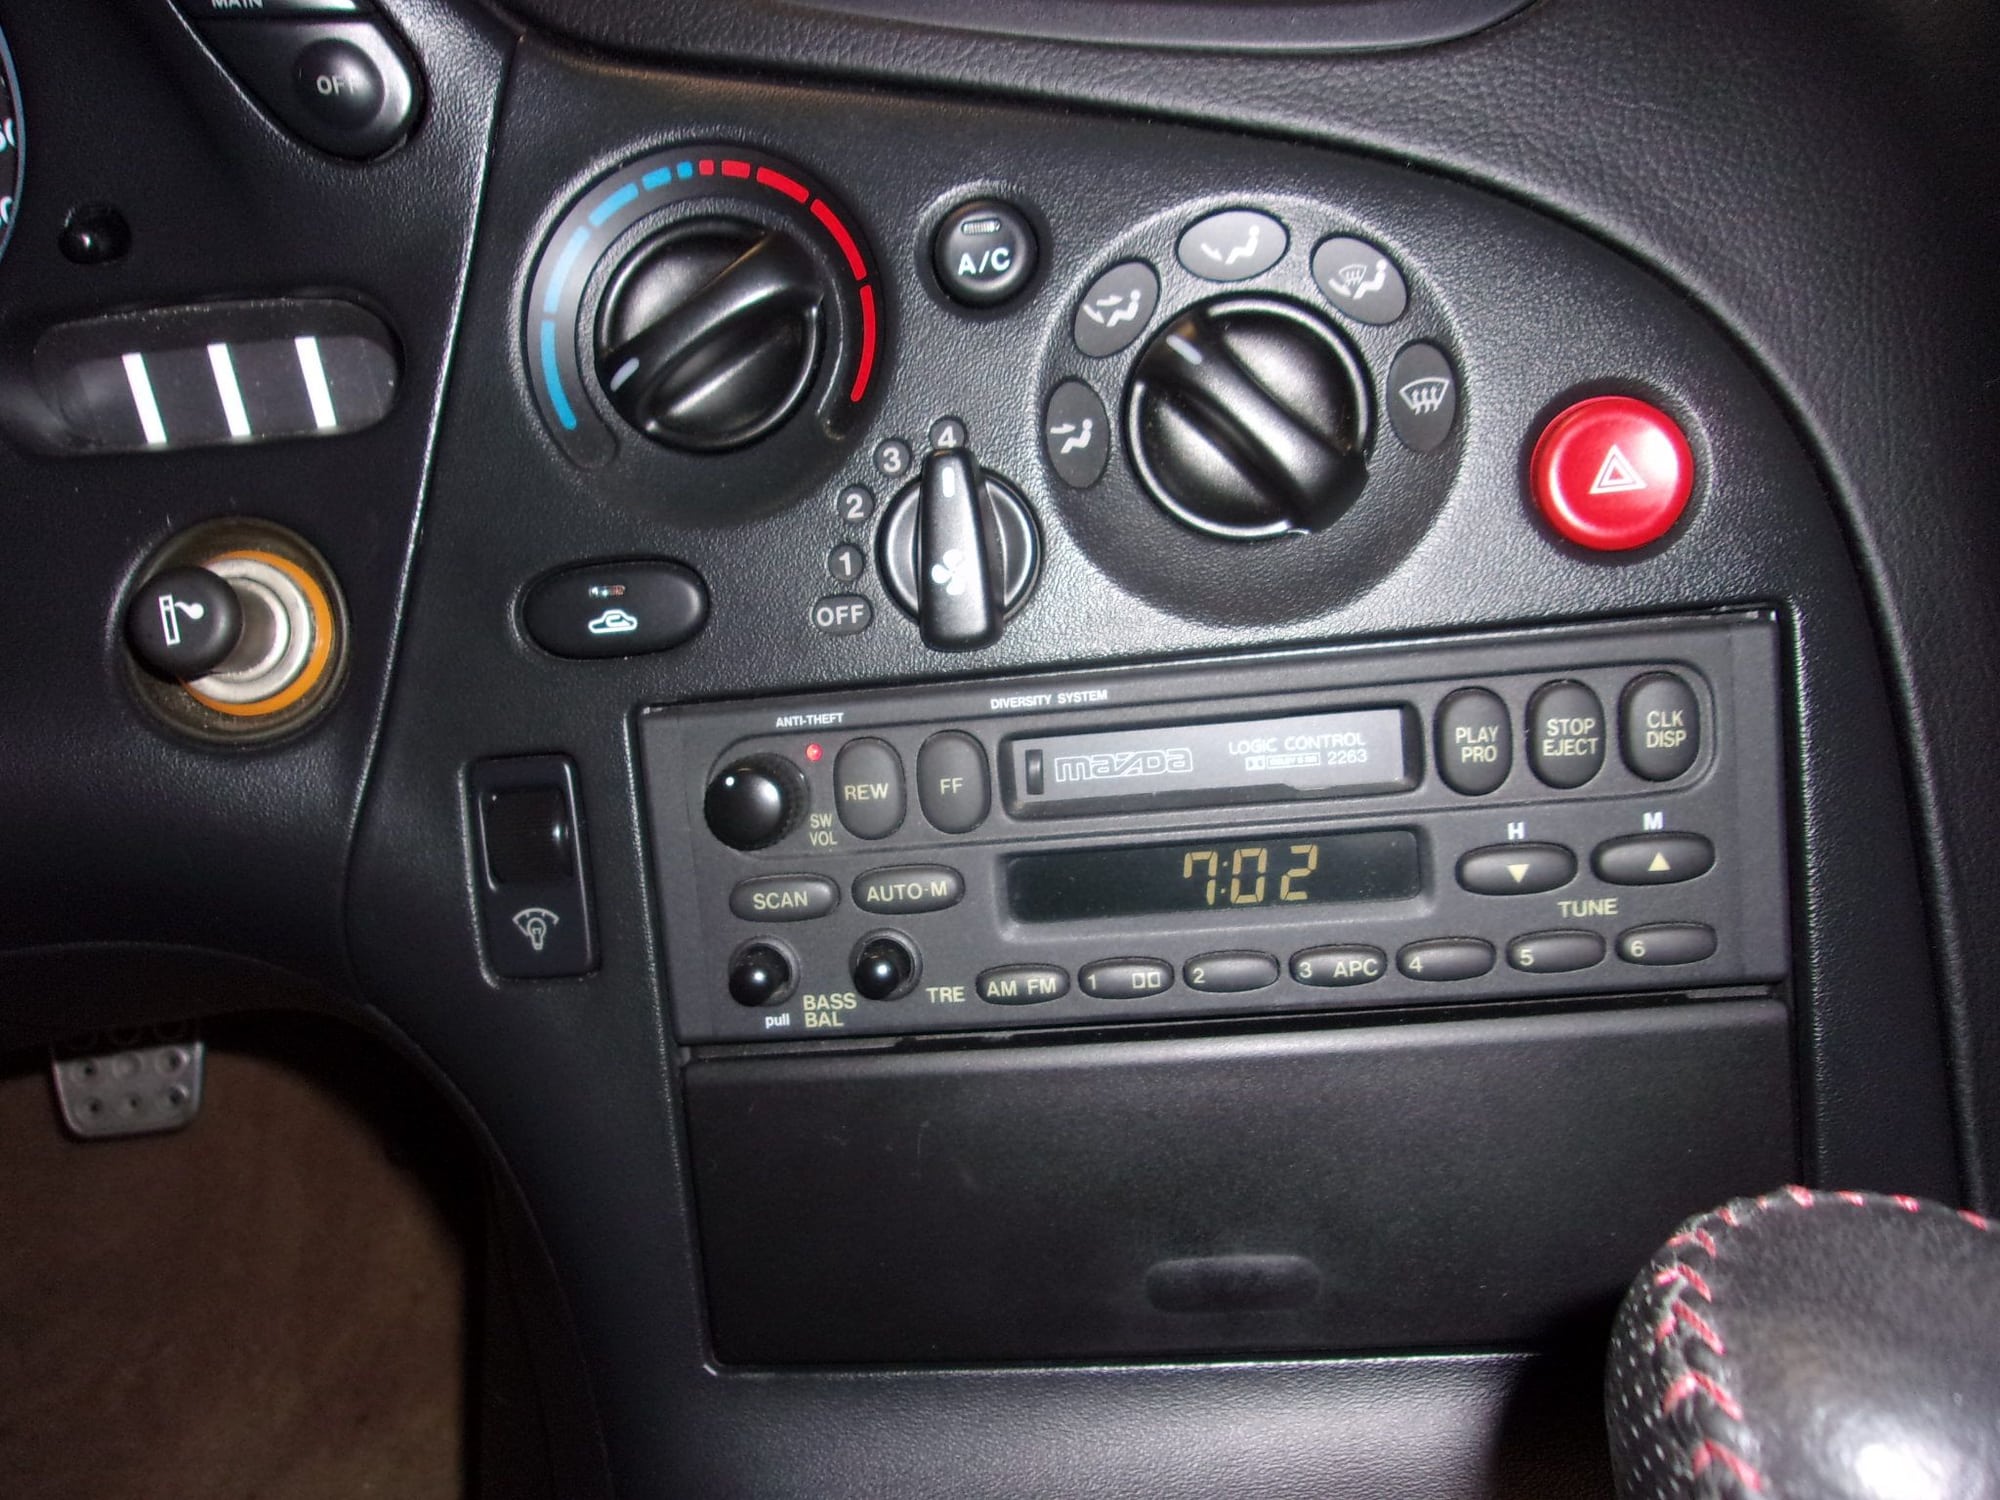 Interior/Upholstery - HVAC Panel - Used - 1993 Mazda RX-7 - Murfreesboro, TN 37130, United States